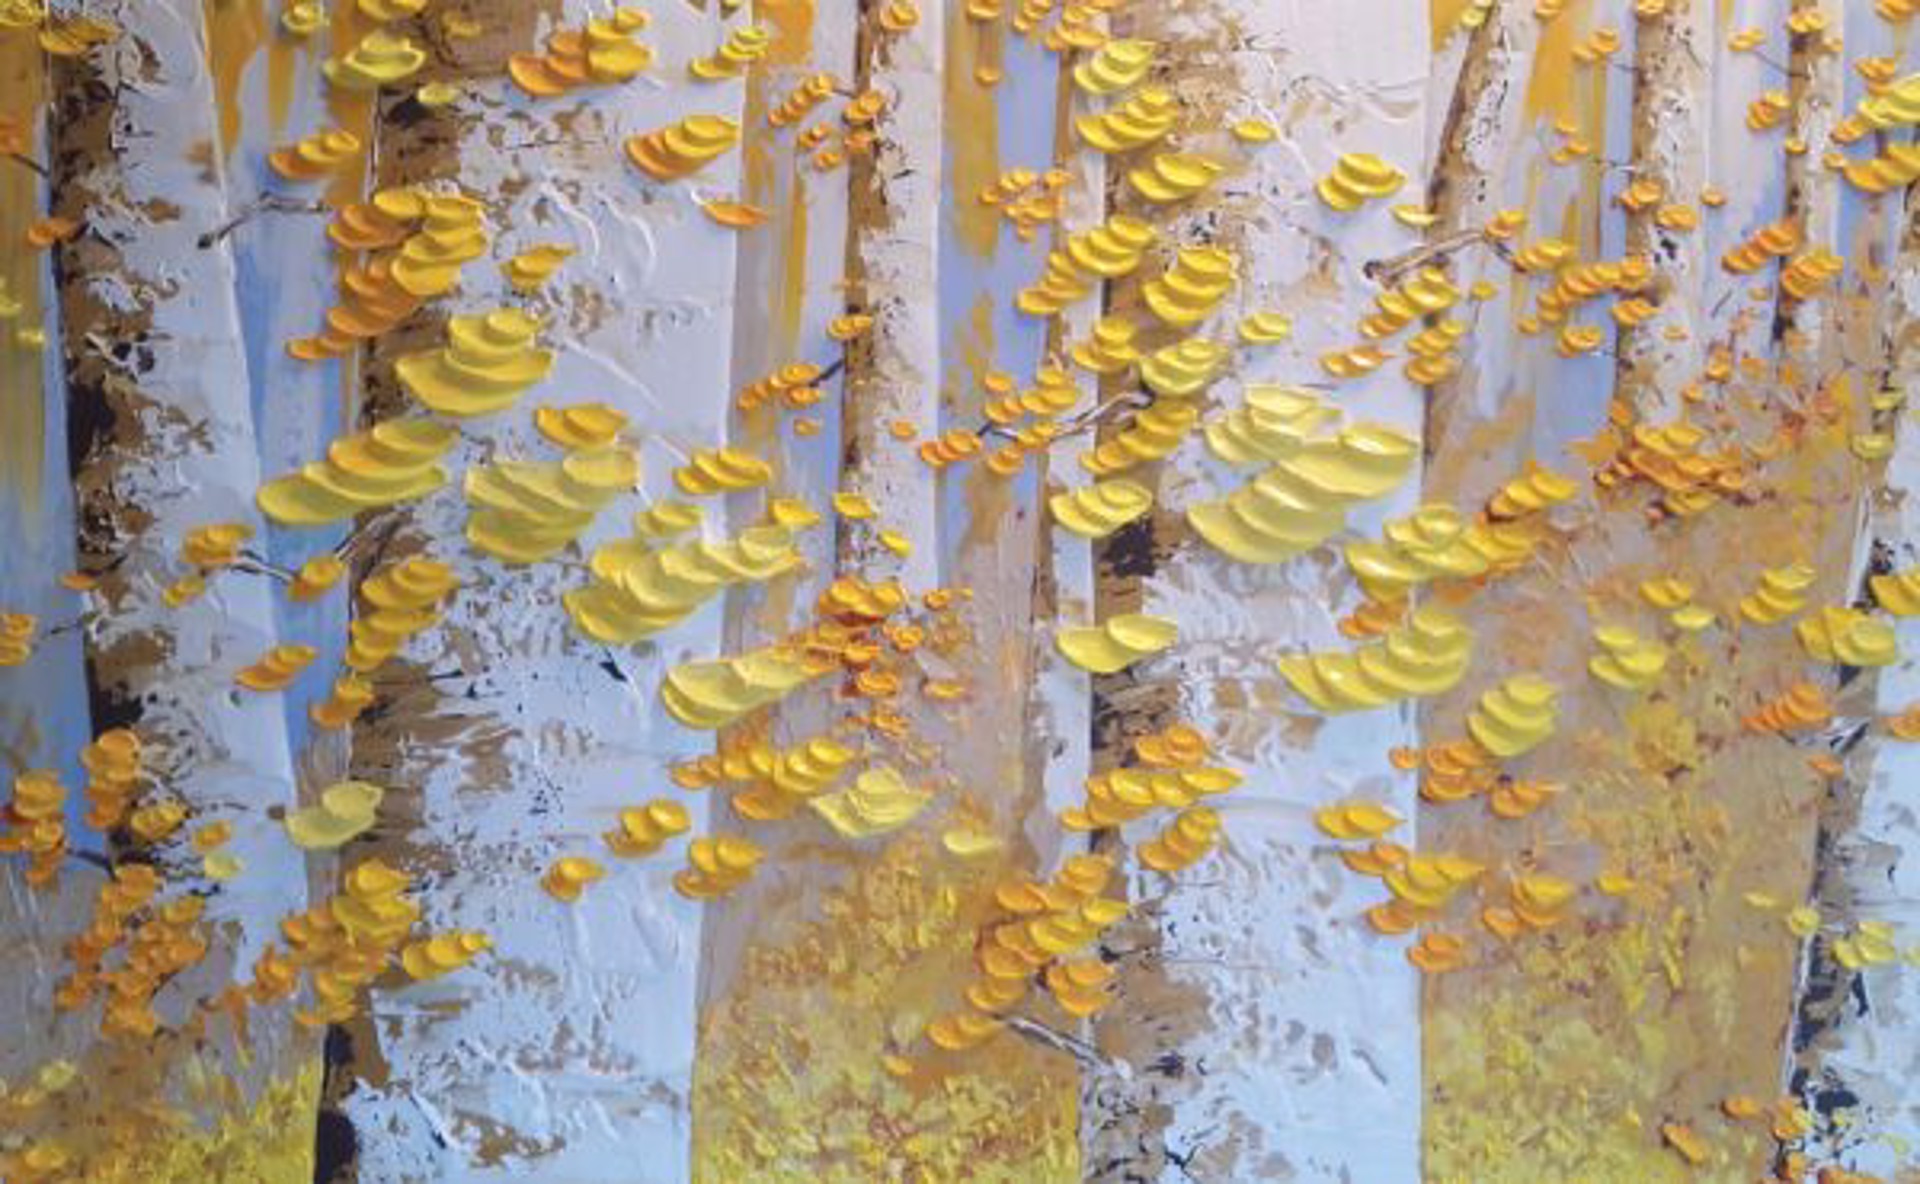 Buttered Birches by EVERIST PROKOFIEV